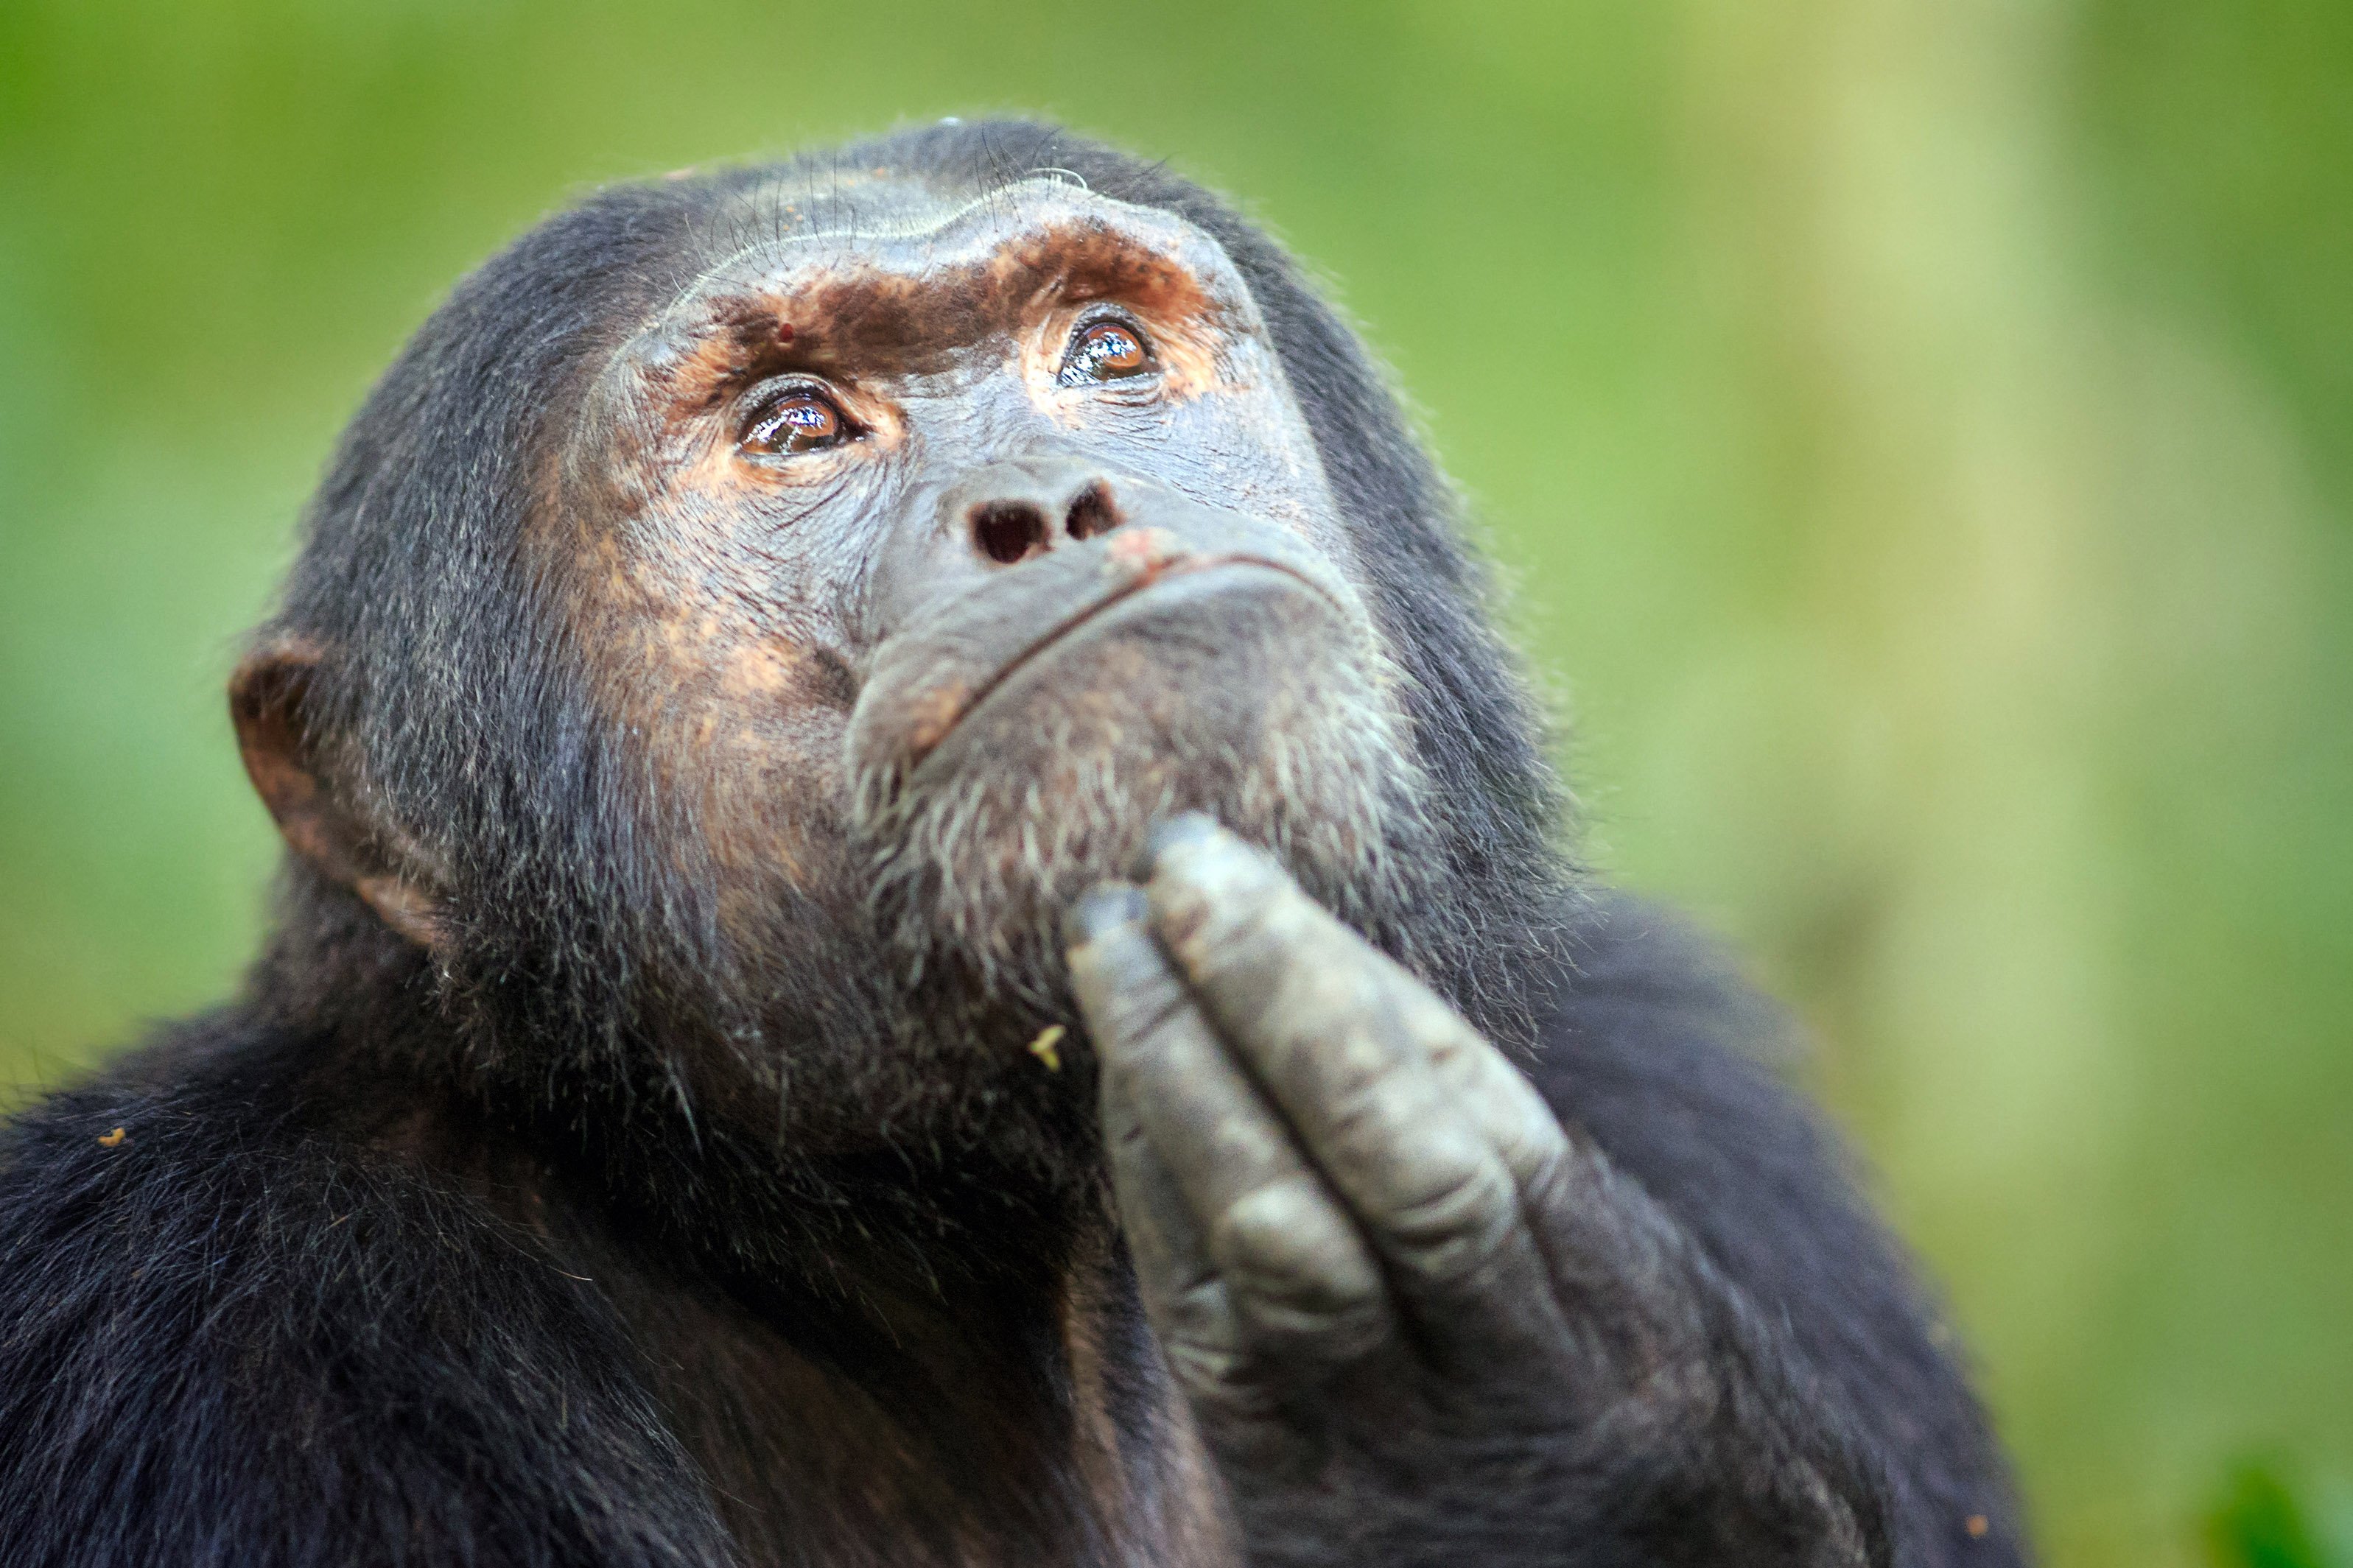 SHimpanze pridumali kreativnyj sposob sbezhat iz zooparka